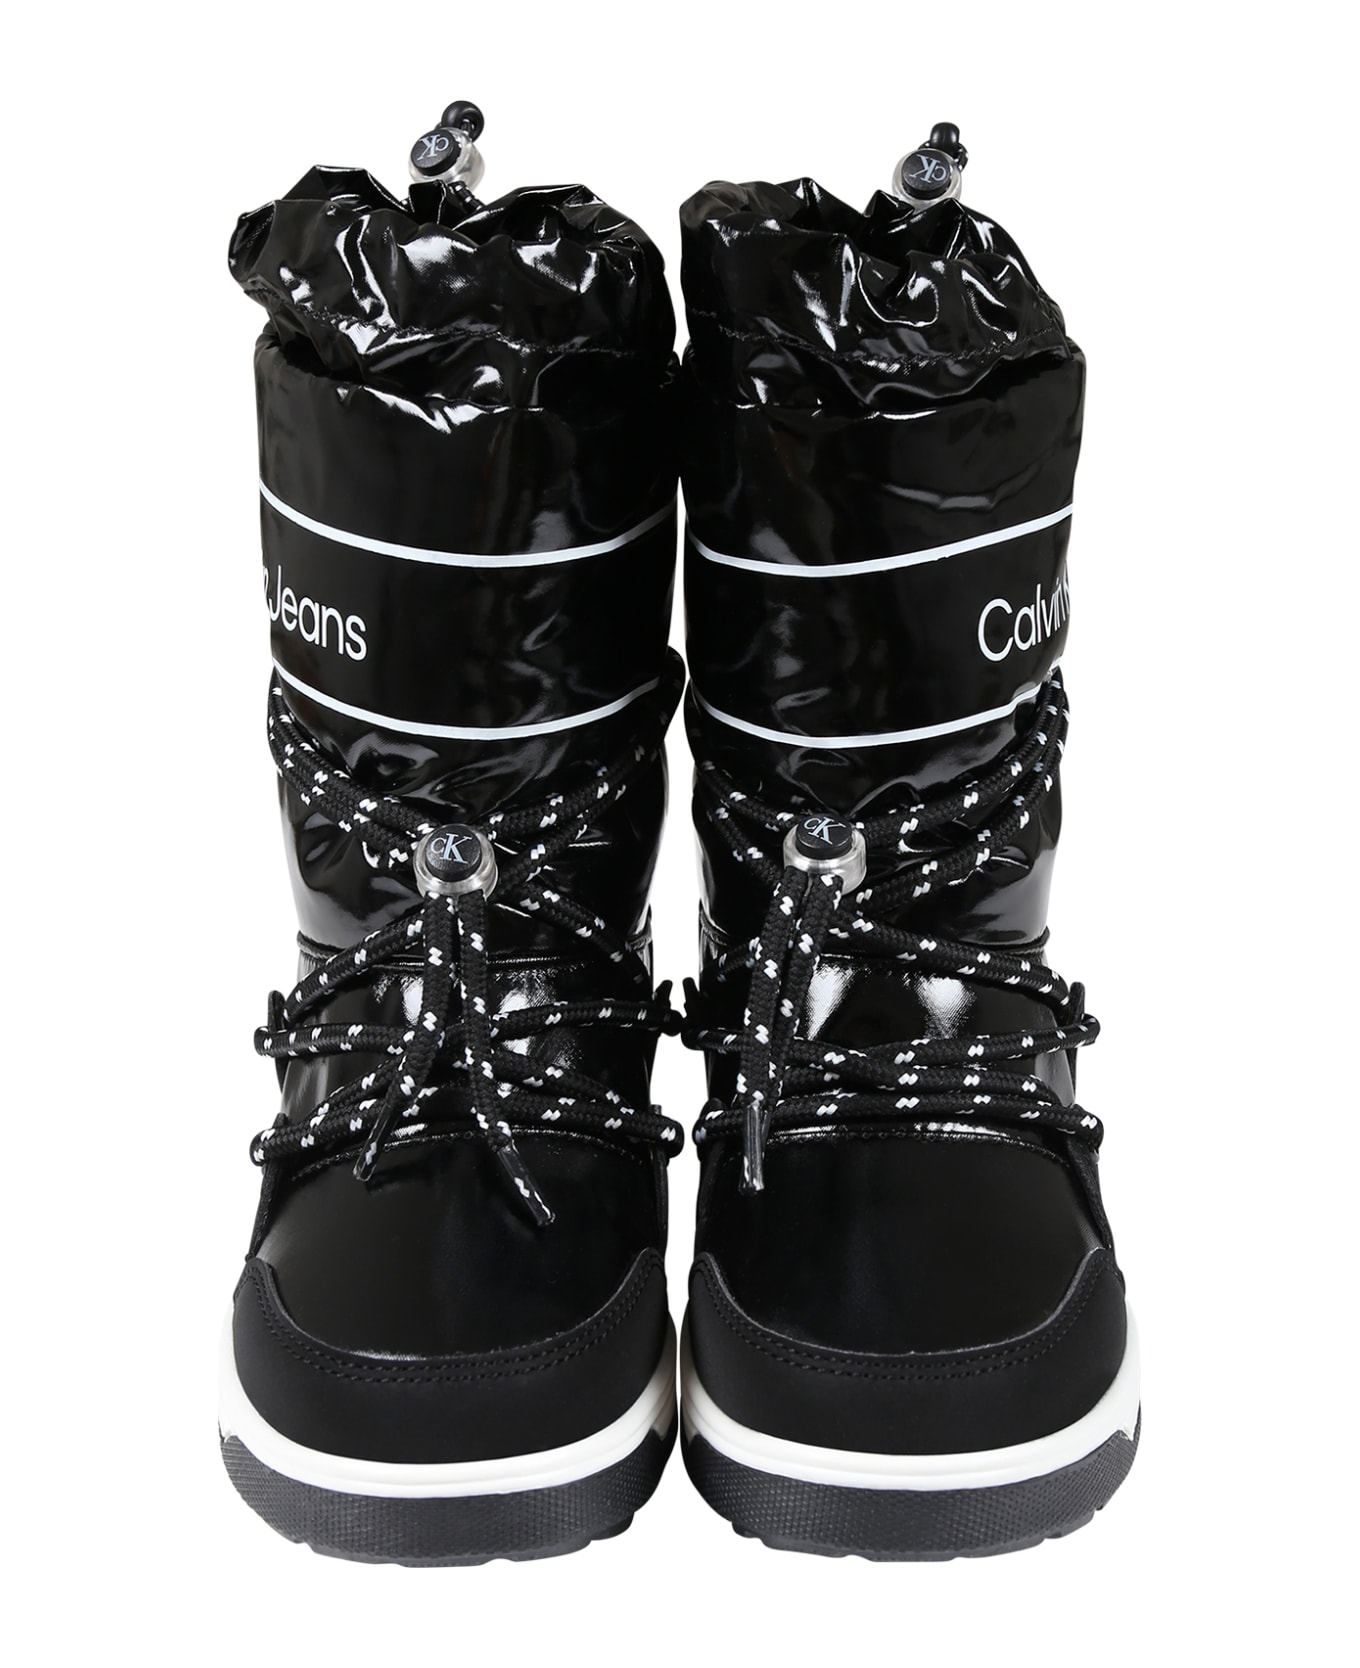 Calvin Klein Black Snow Boots For Girl With Logo - Black